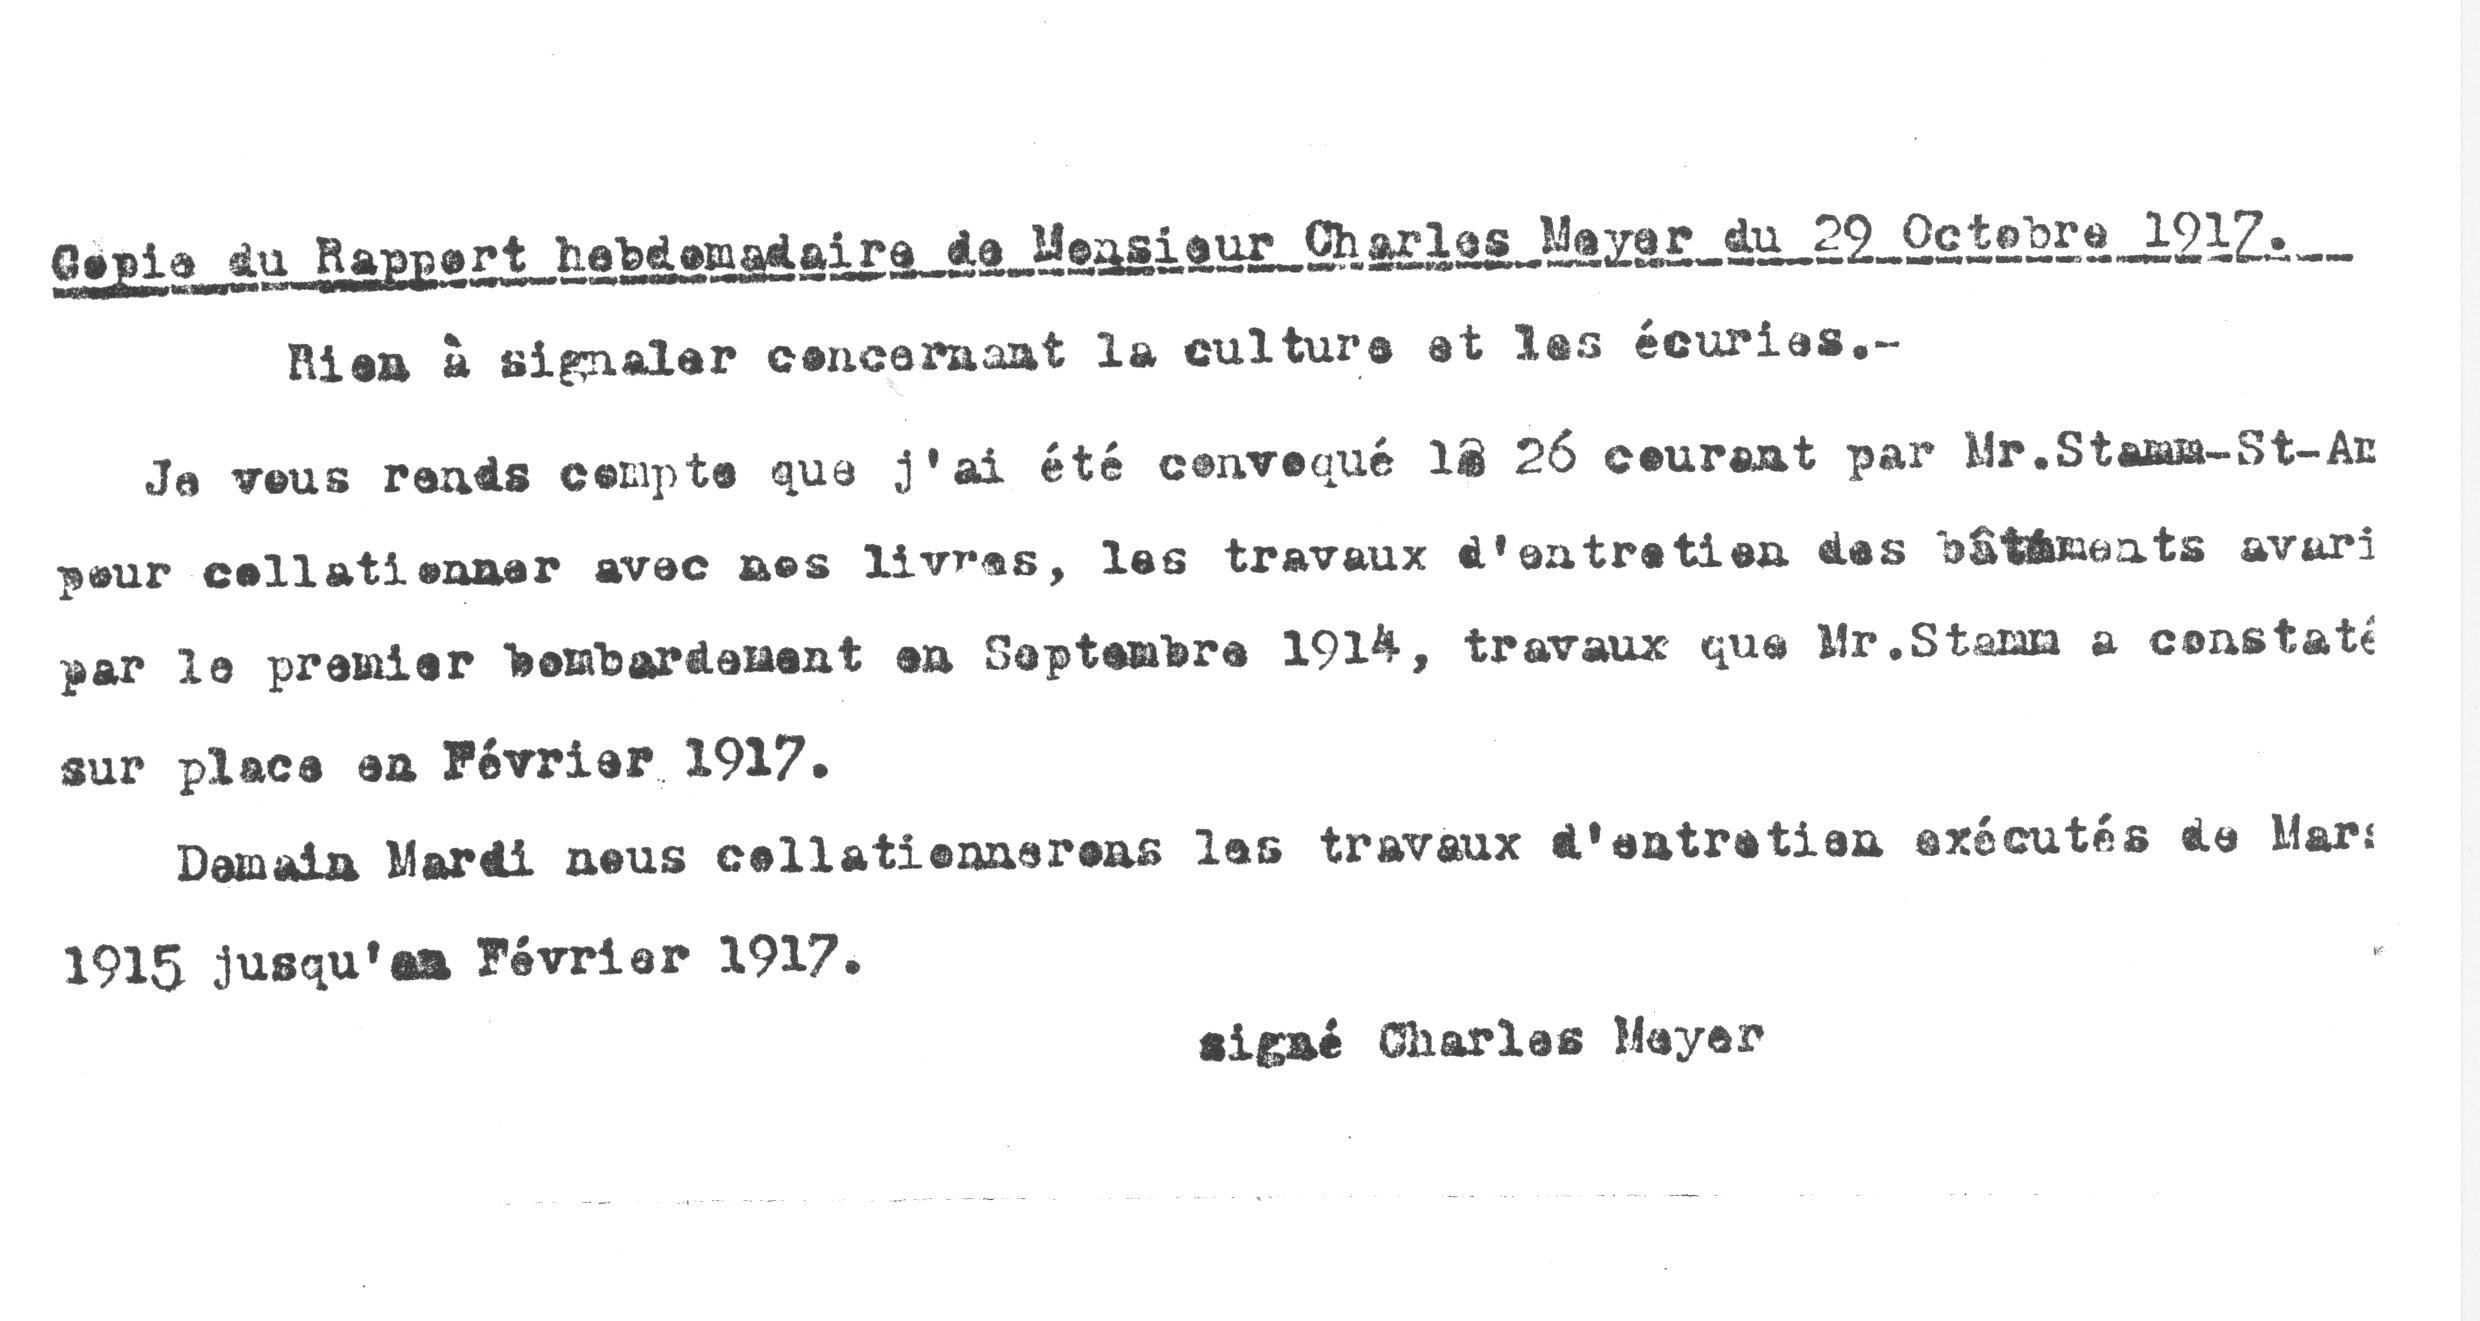 1917 – Copie du rapport hebdomadaire de Charles Meyer, 29 Octobre 1917